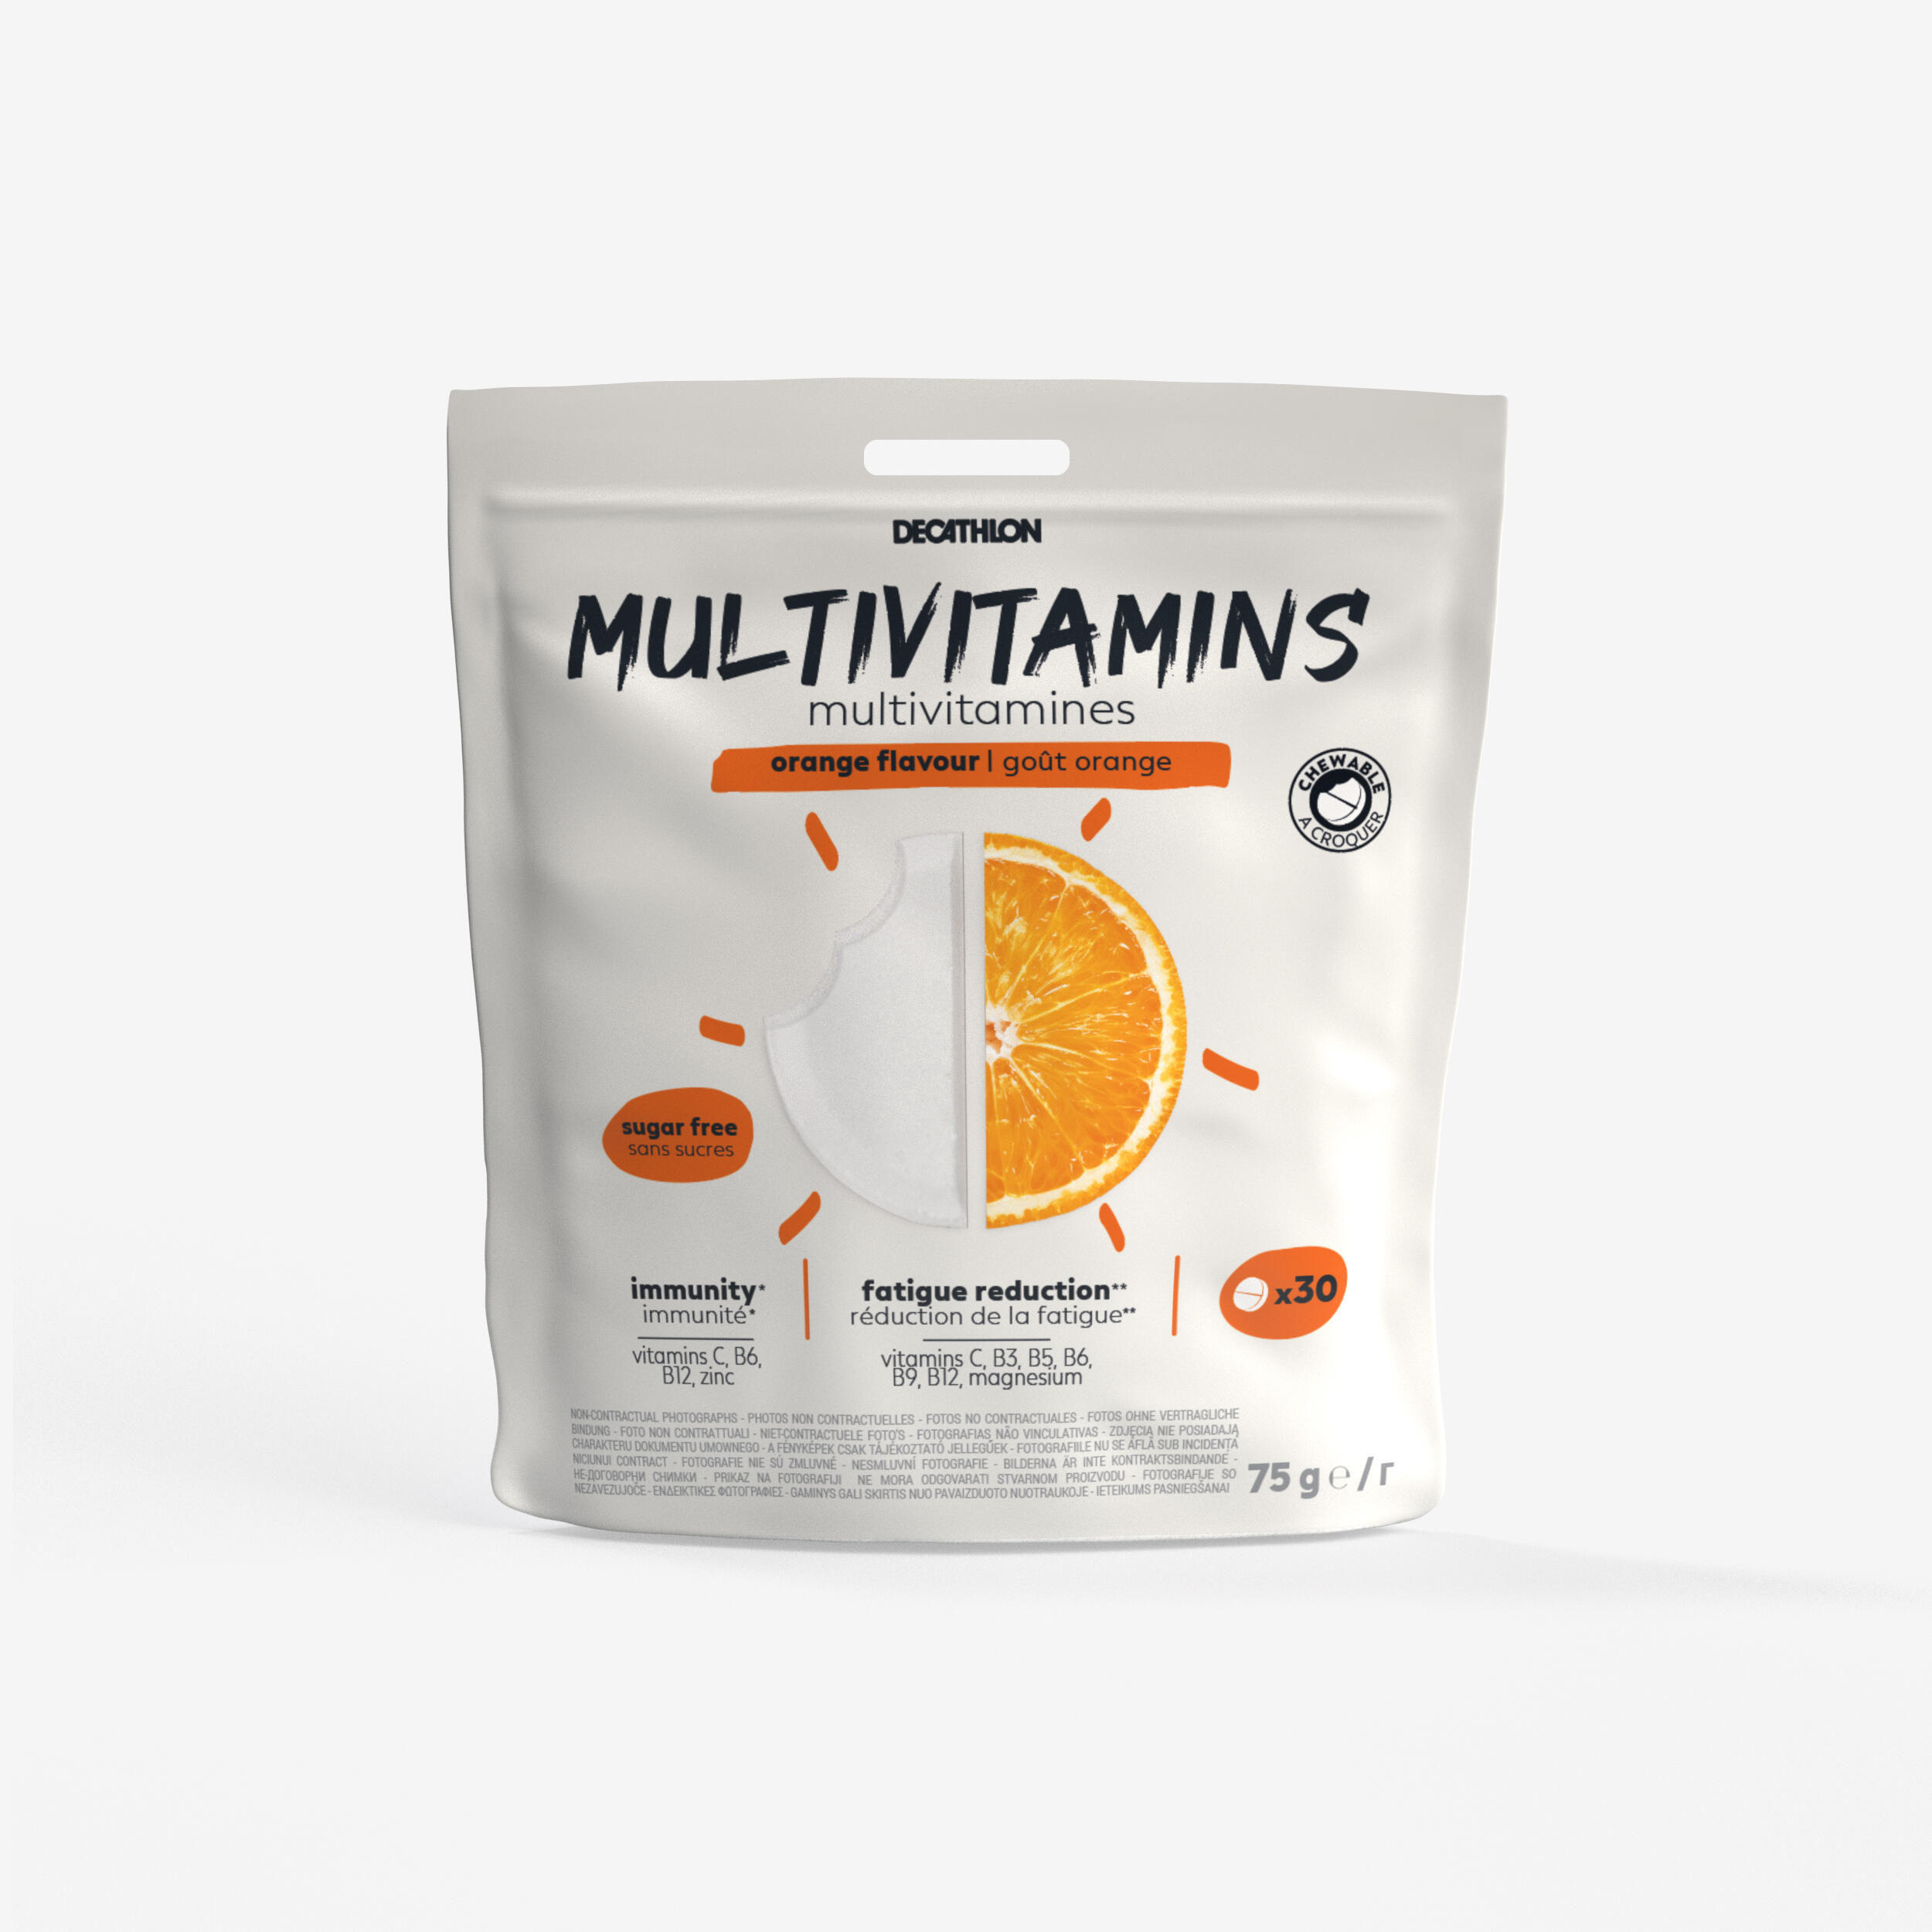 DECATHLON Multivitamins and sugar-free natural orange flavour - 30 tablets